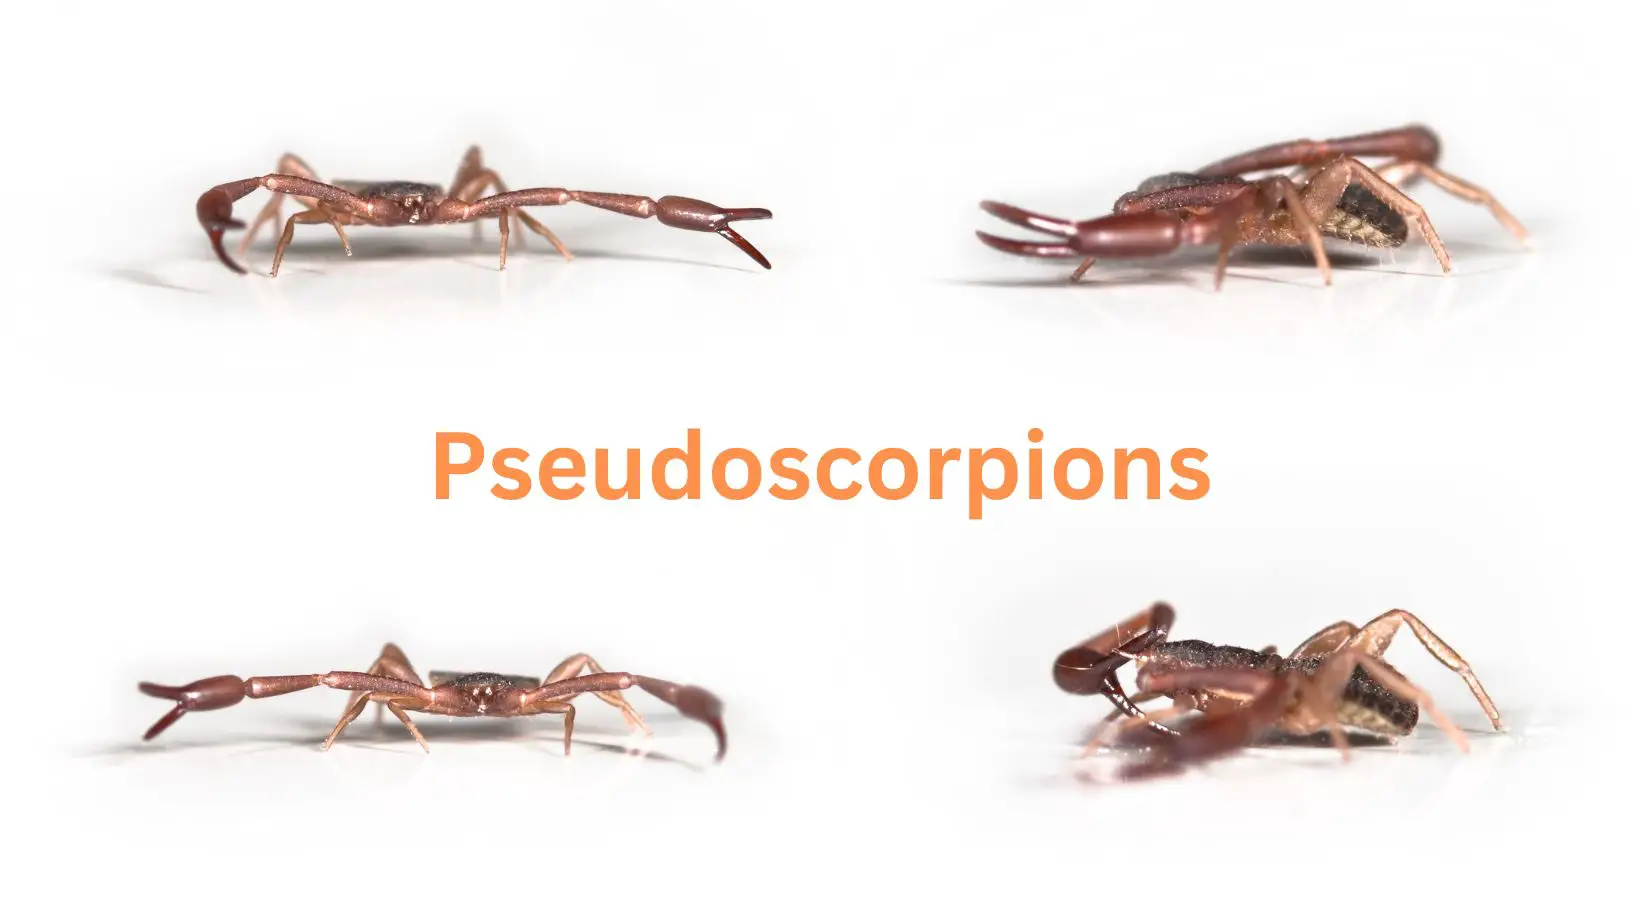 Types of Pseudoscorpions